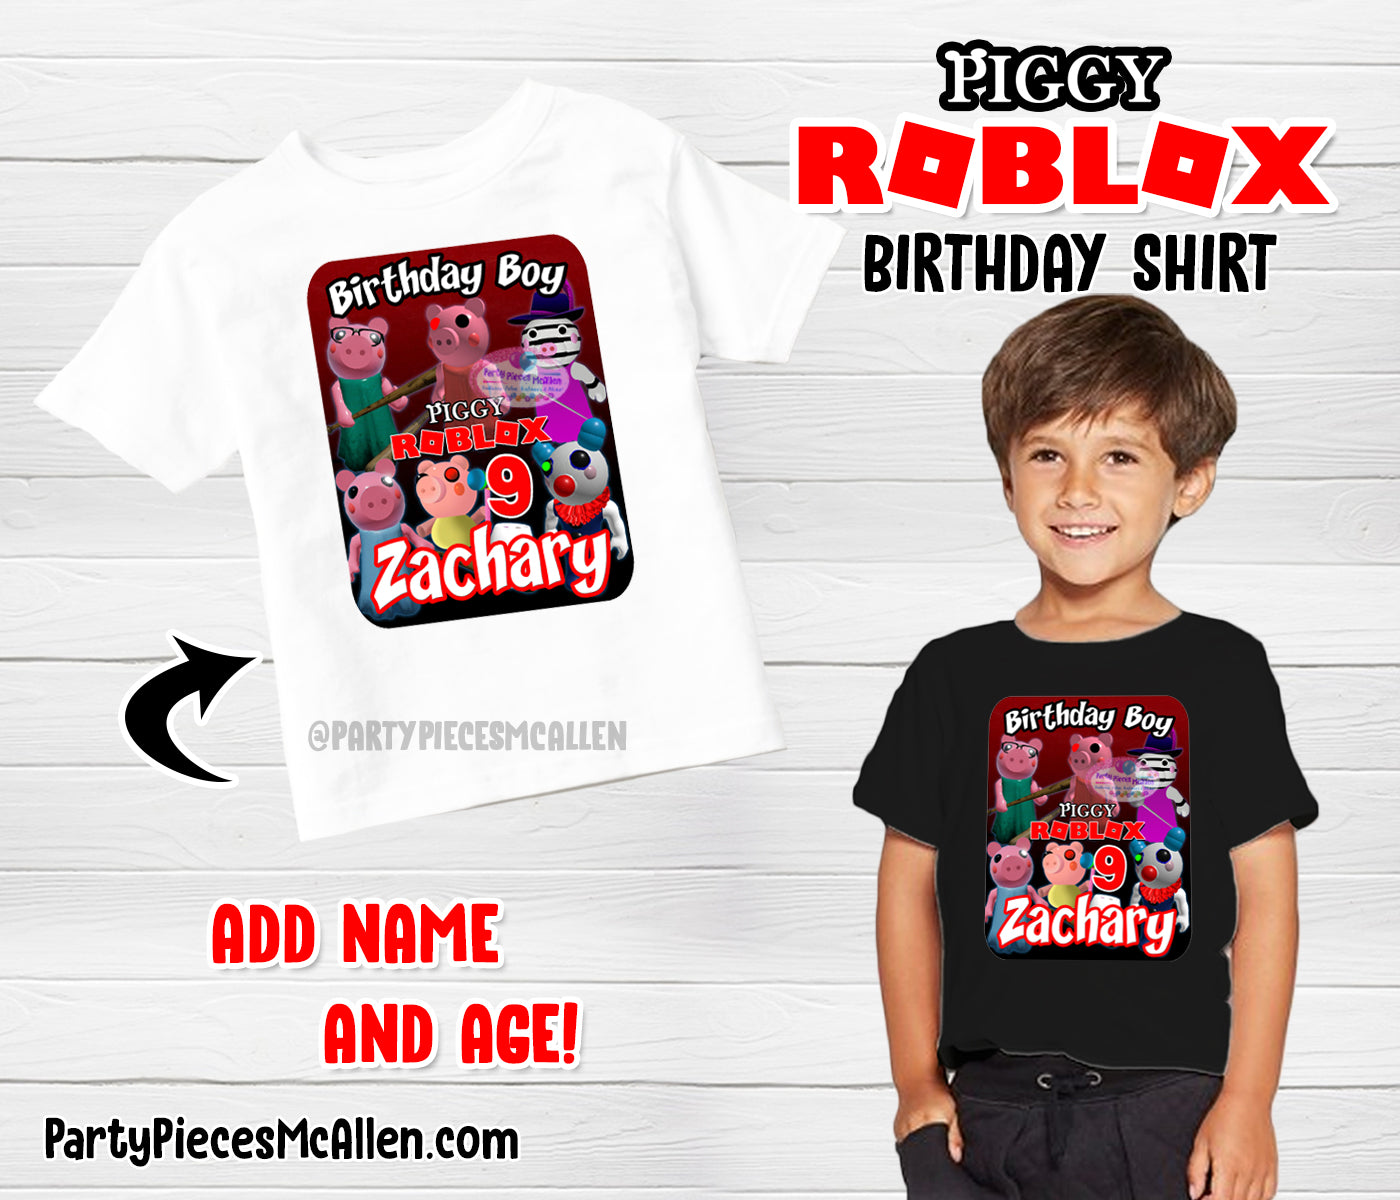 Preorder: Roblox Shirt Roblox T Shirt Boy and Girl's Shirt